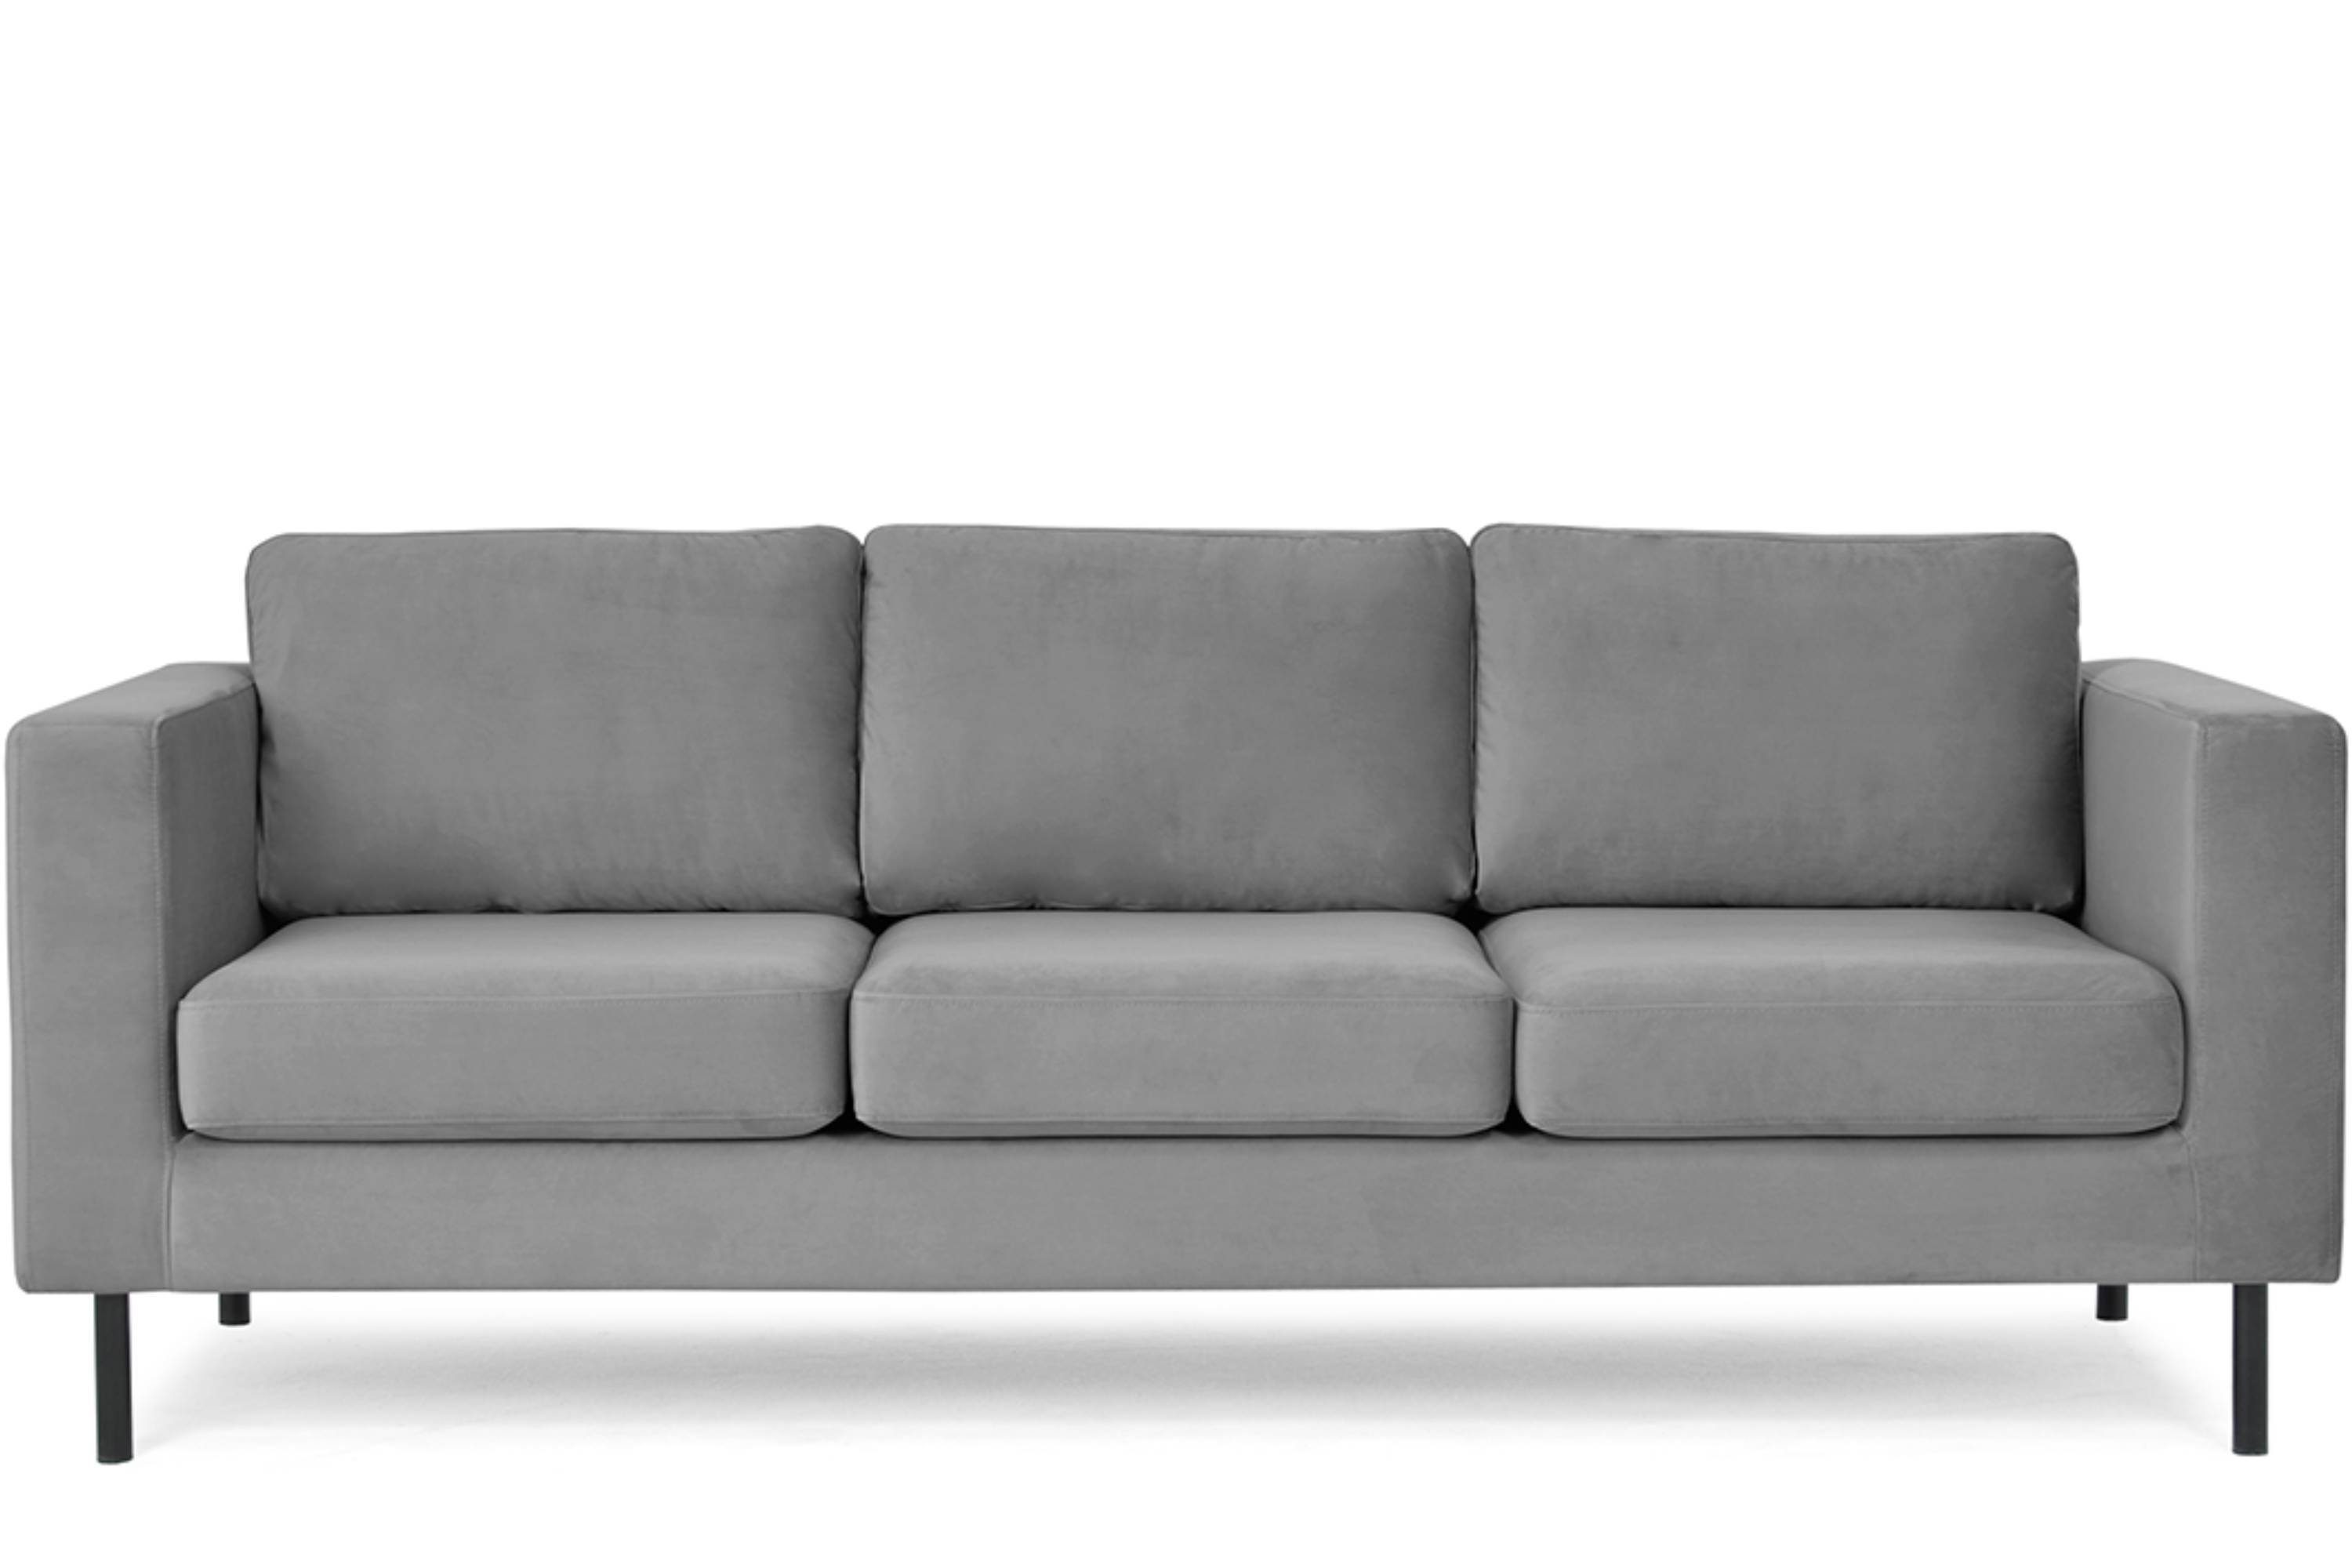 Konsimo grau Design Personen, | Beine, grau universelles hohe Sofa grau | 3-Sitzer TOZZI 3